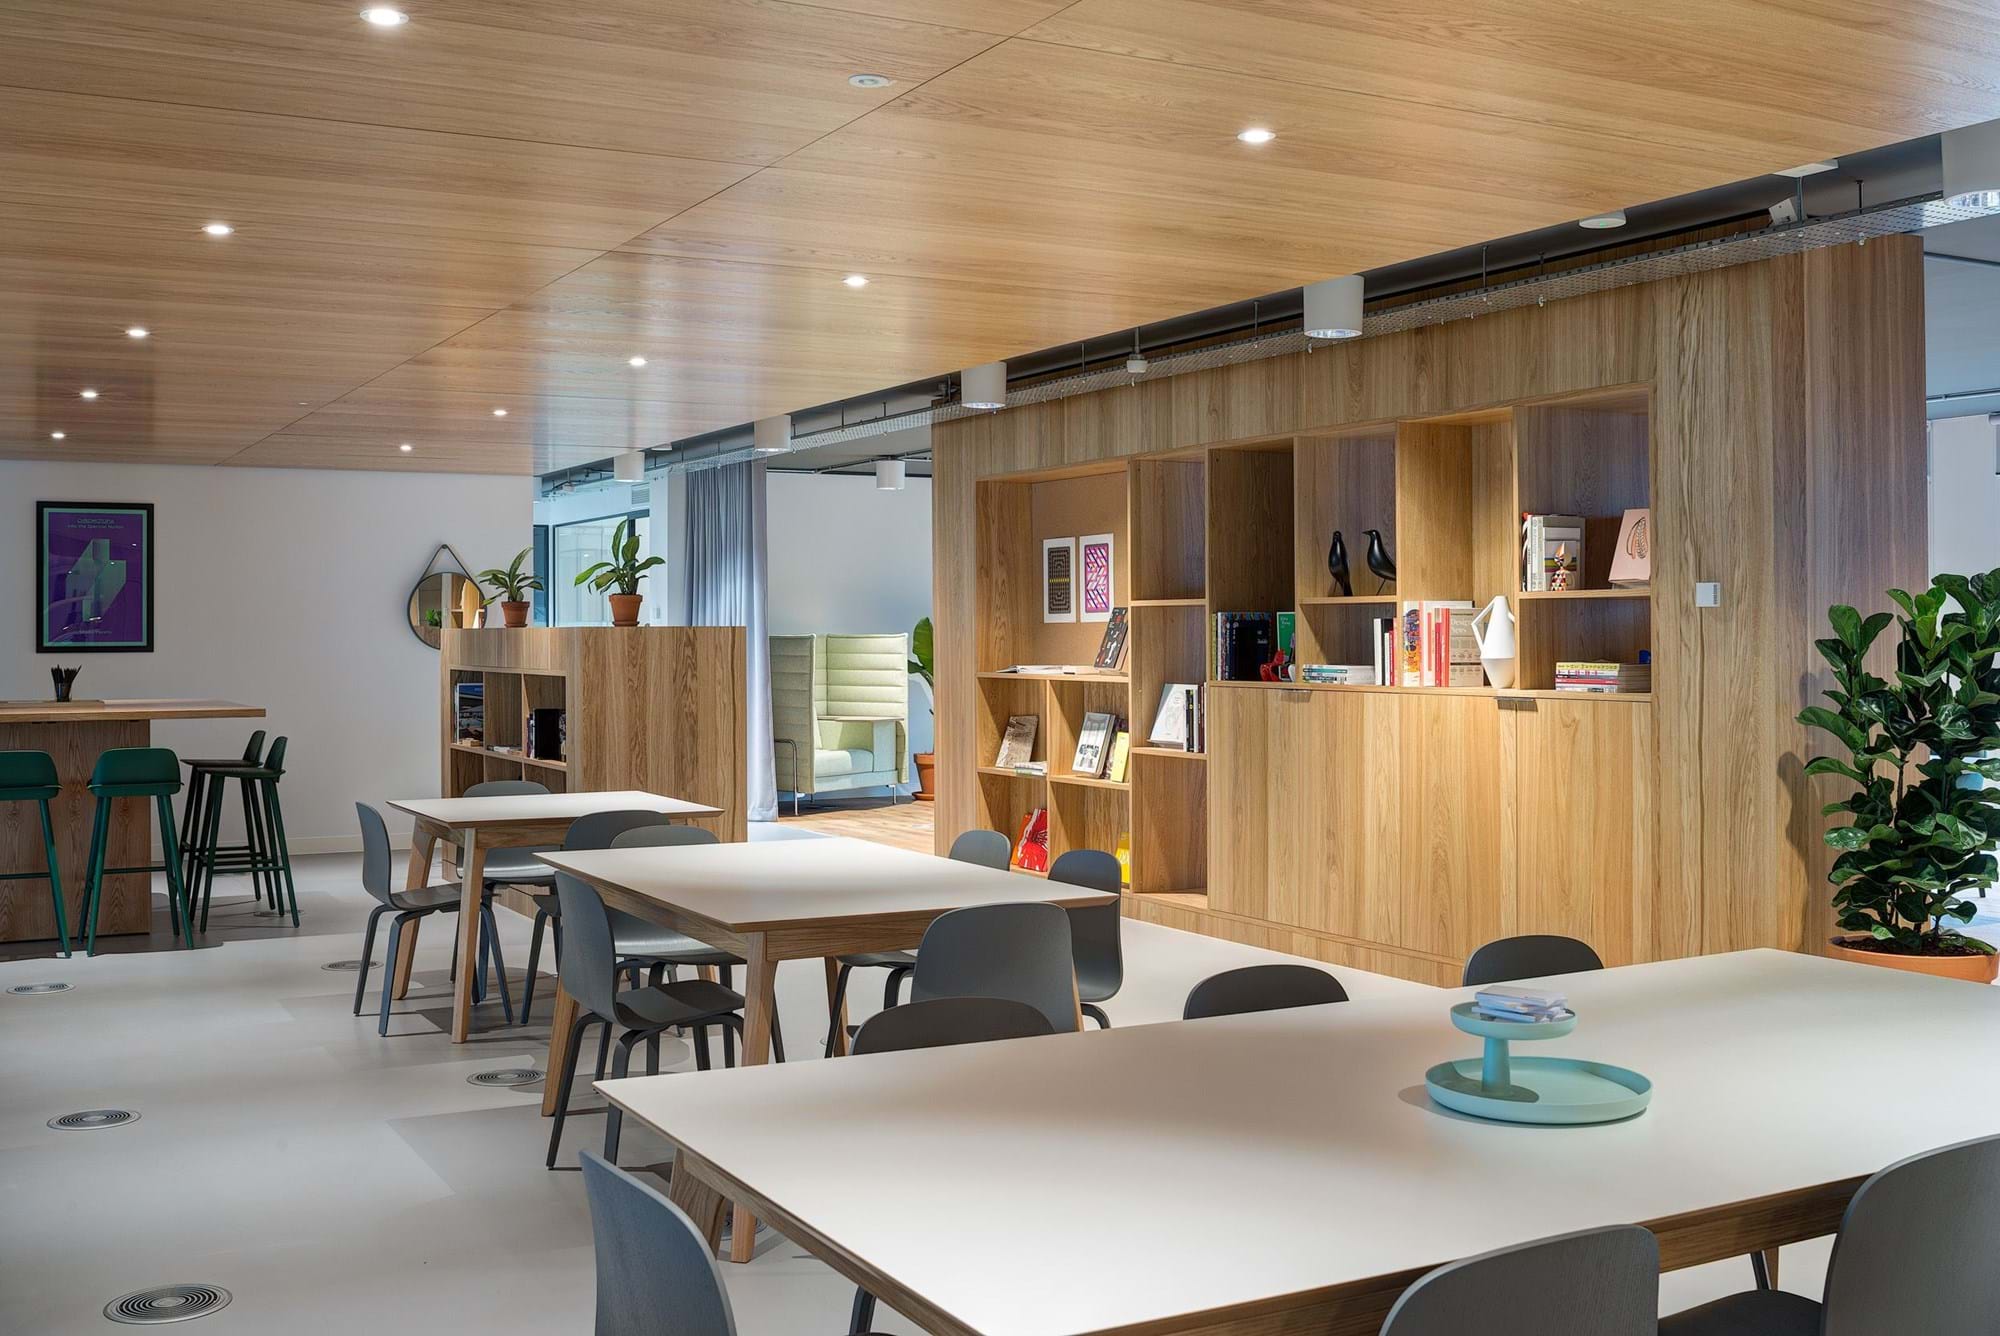 Modus Workspace office design, fit out and refurbishment - Spaces - Uxbridge - Spaces Uxbridge 06 highres sRGB.jpg